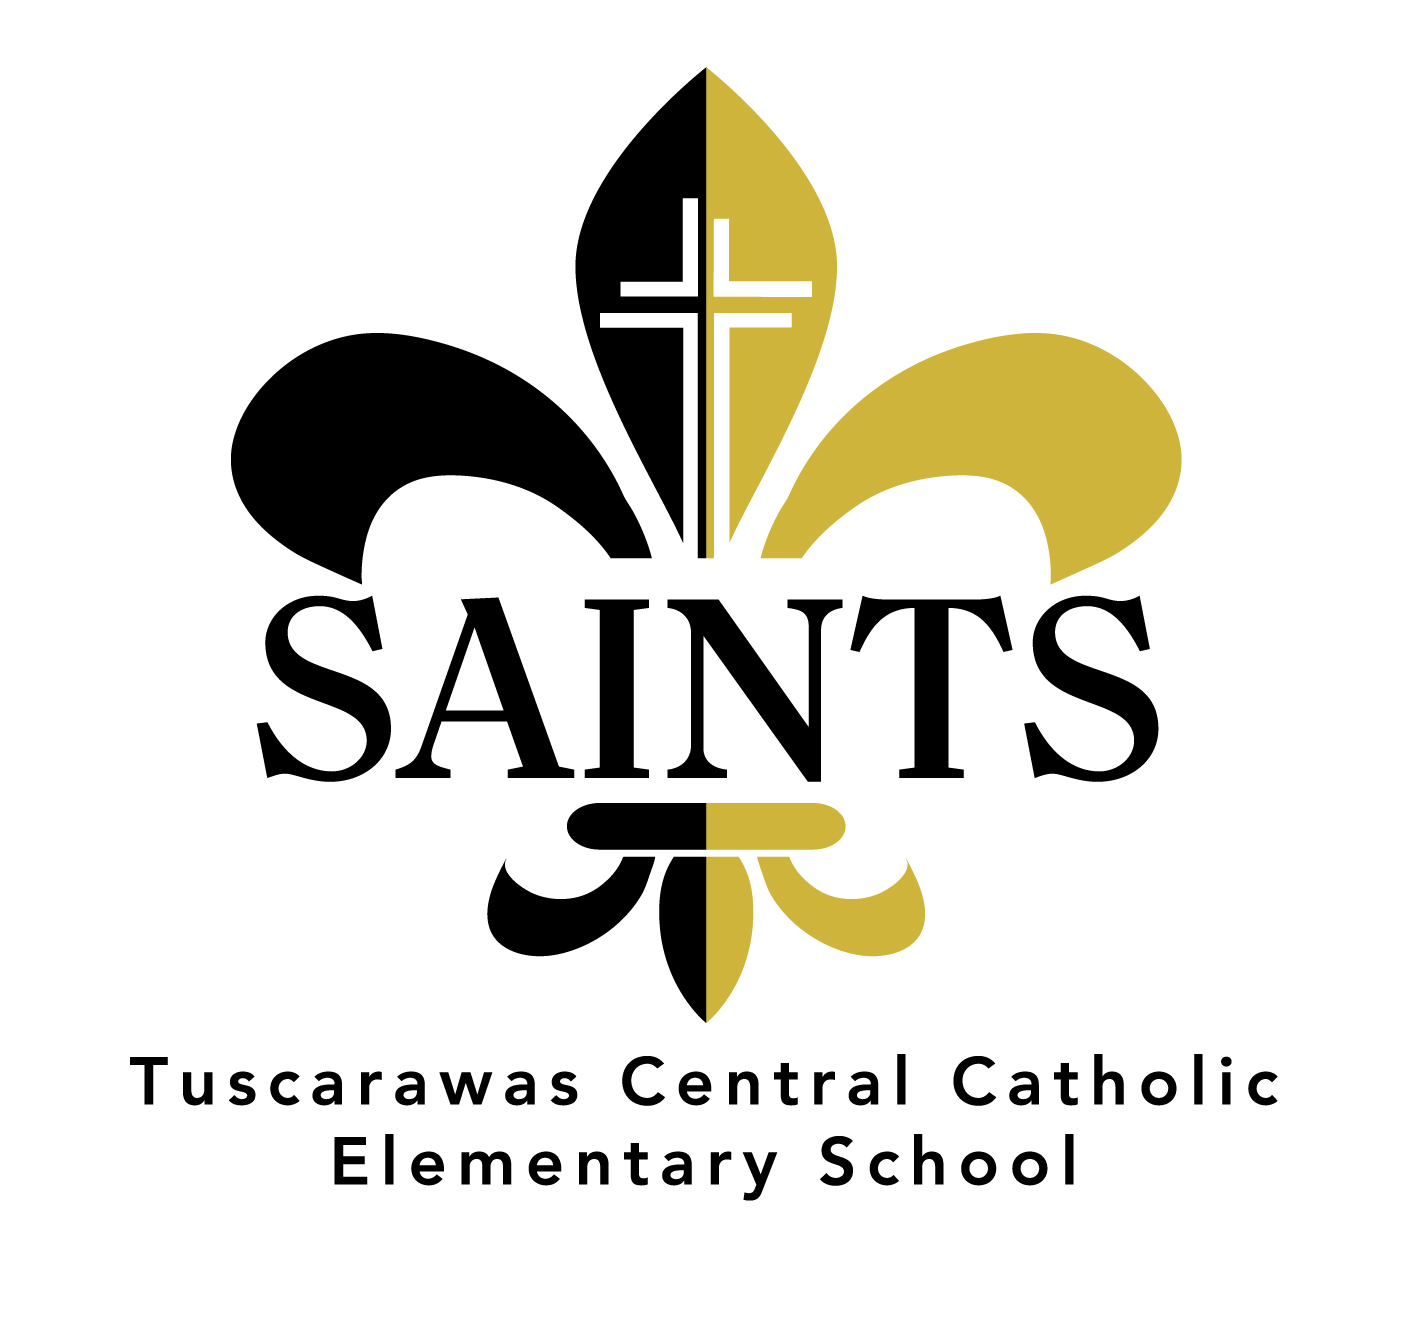 Tuscarawas Central Catholic Elementary School logo